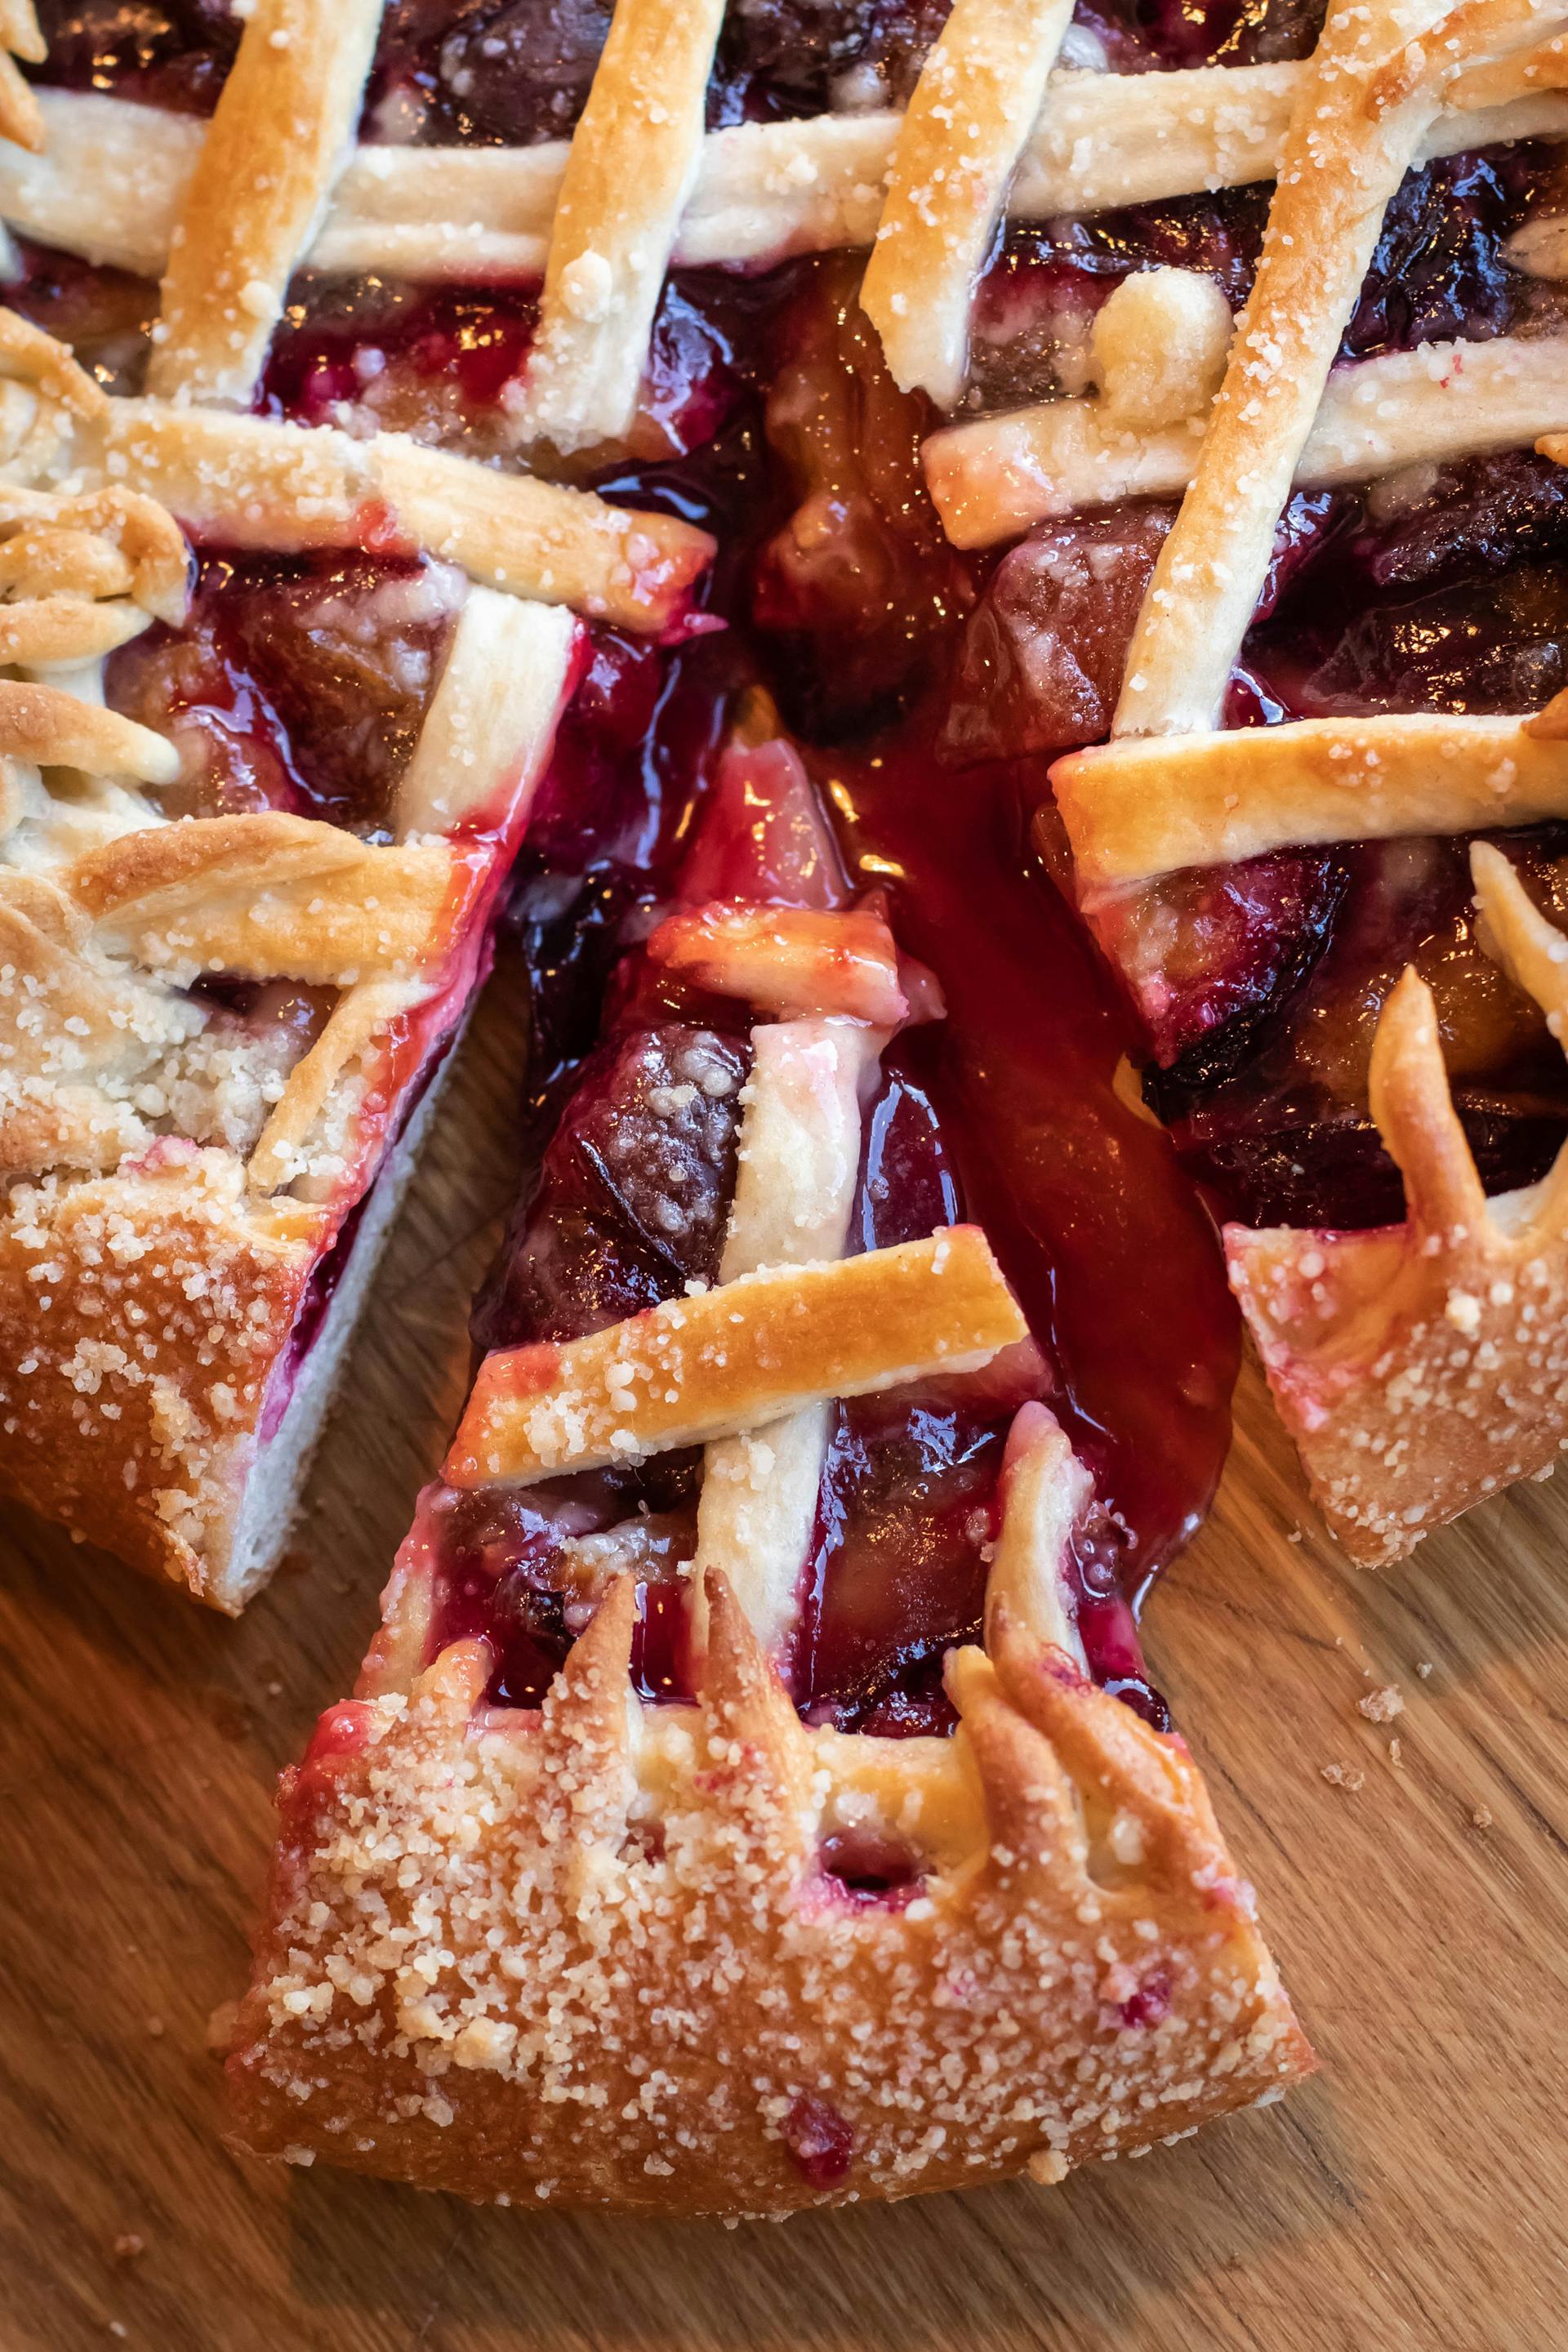 A slice of cherry pie | Source: Pexels